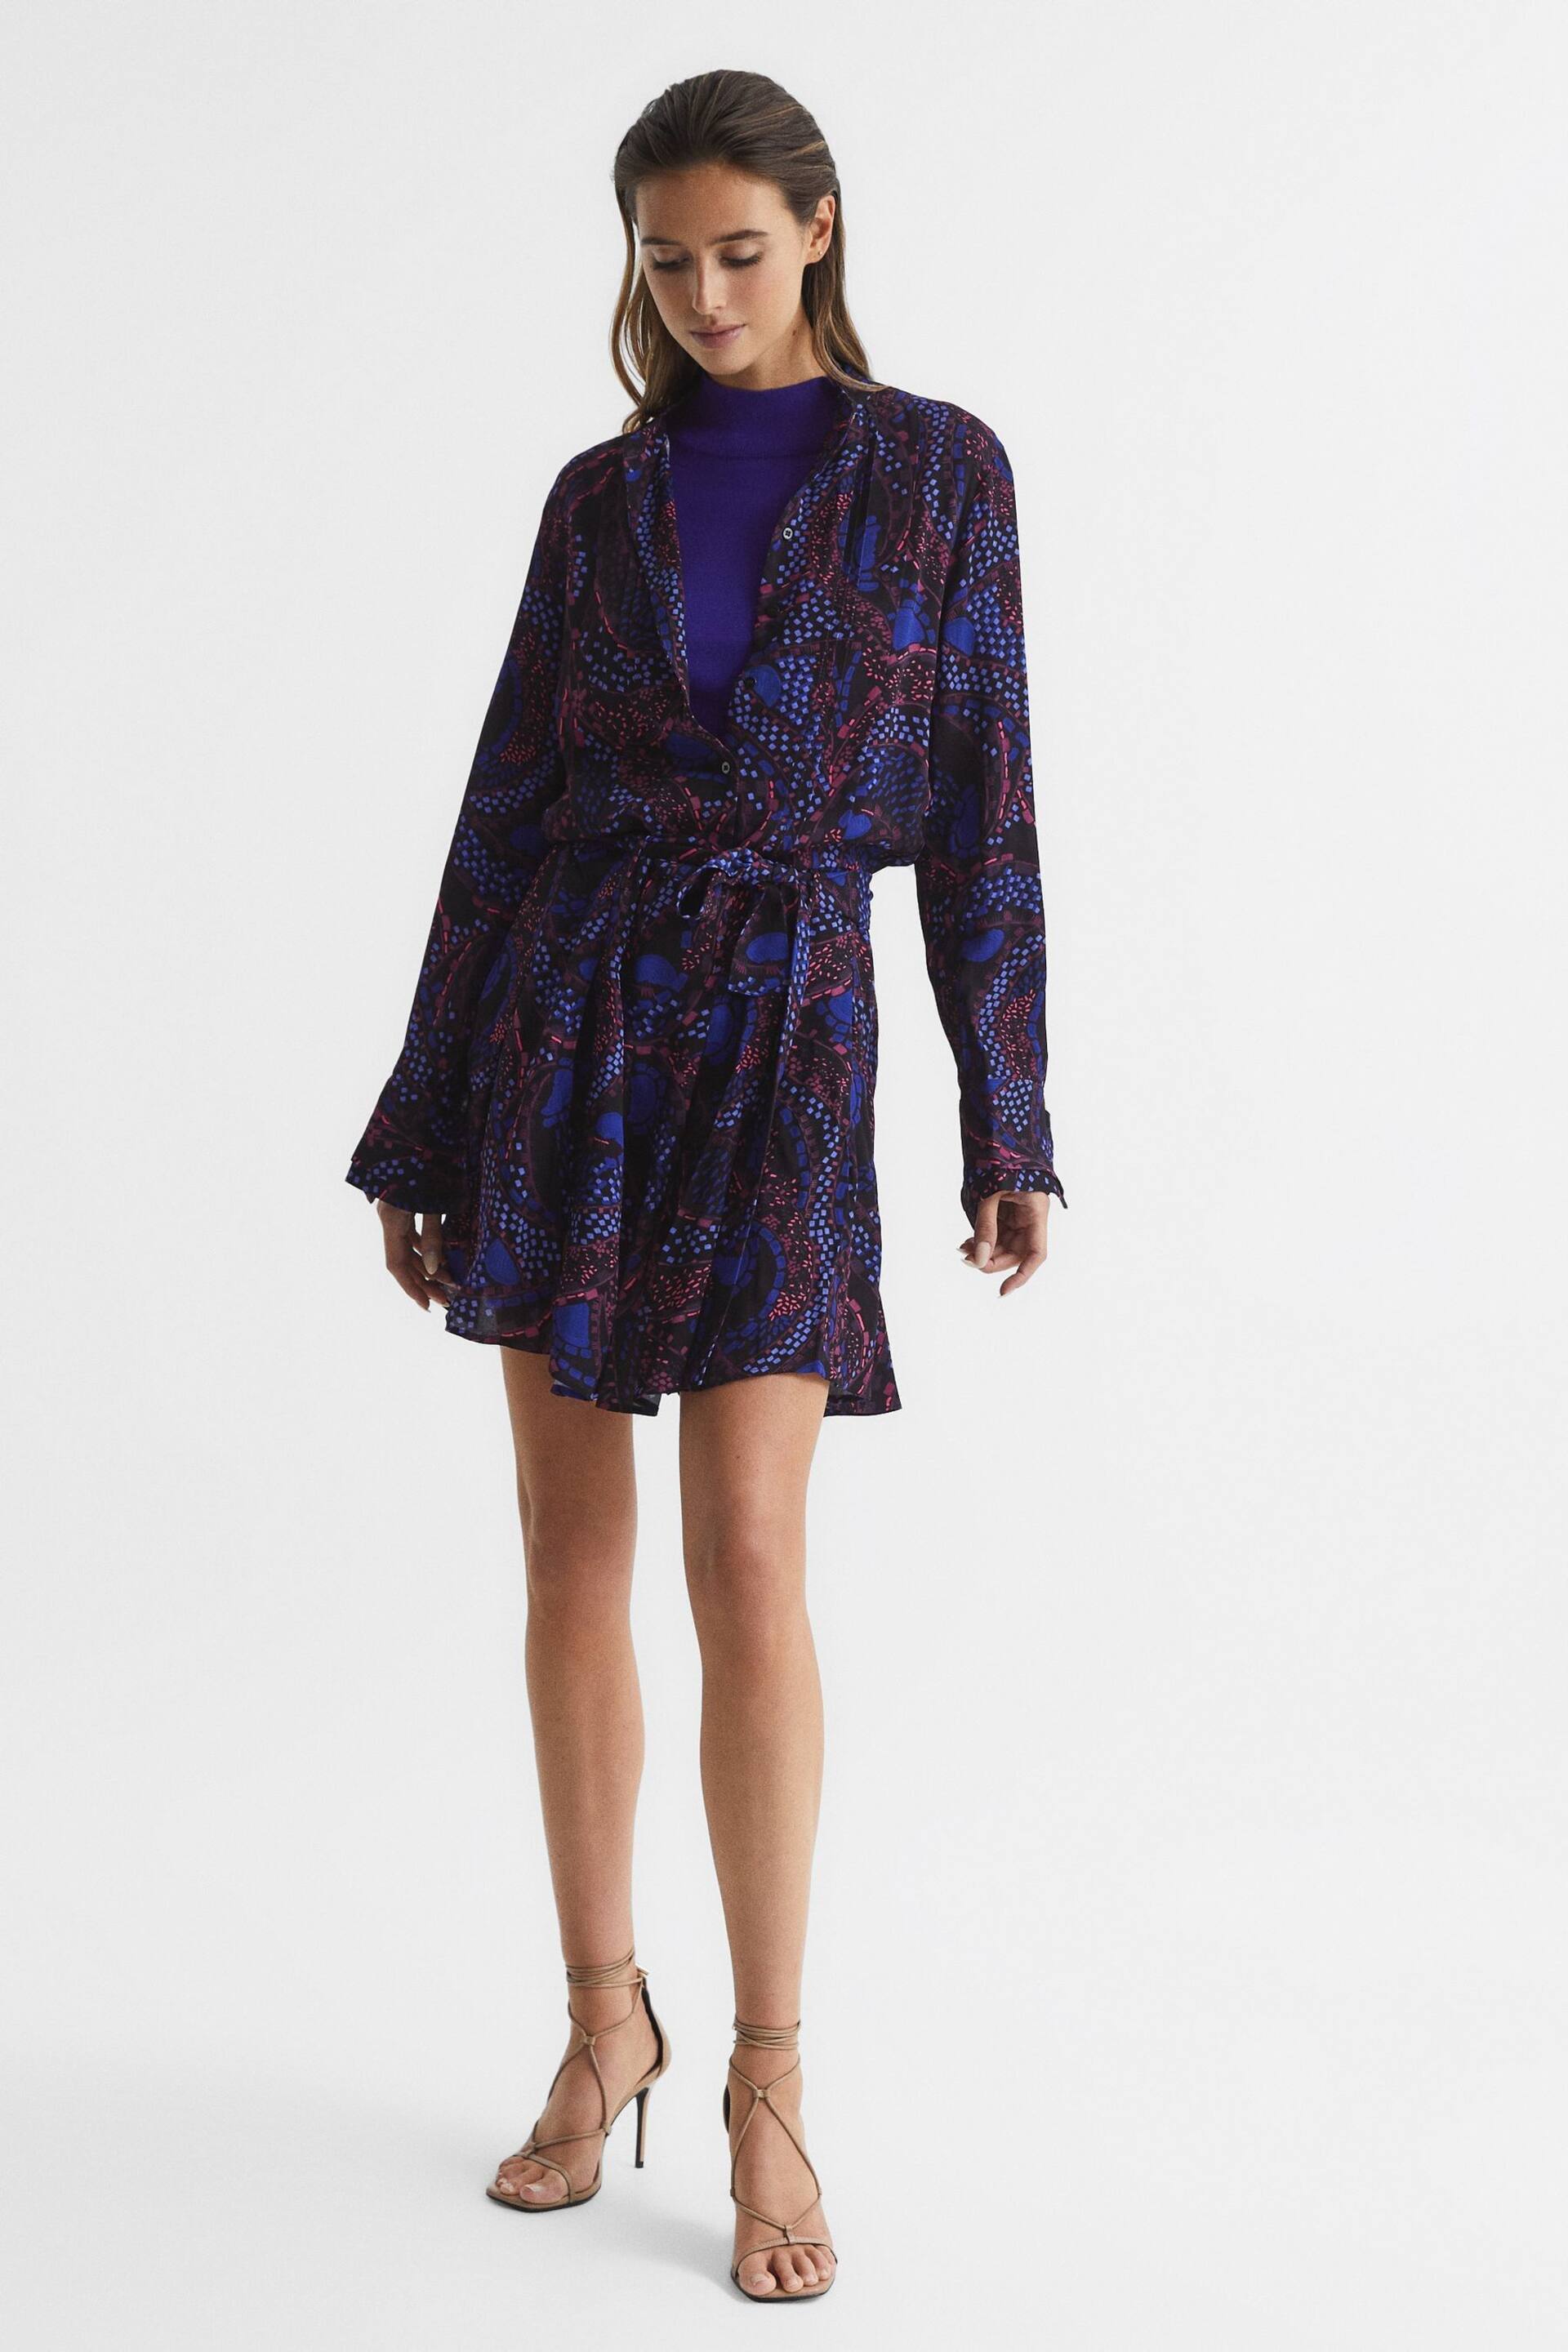 Reiss Purple Sienna Printed Mini Dress - Image 6 of 7